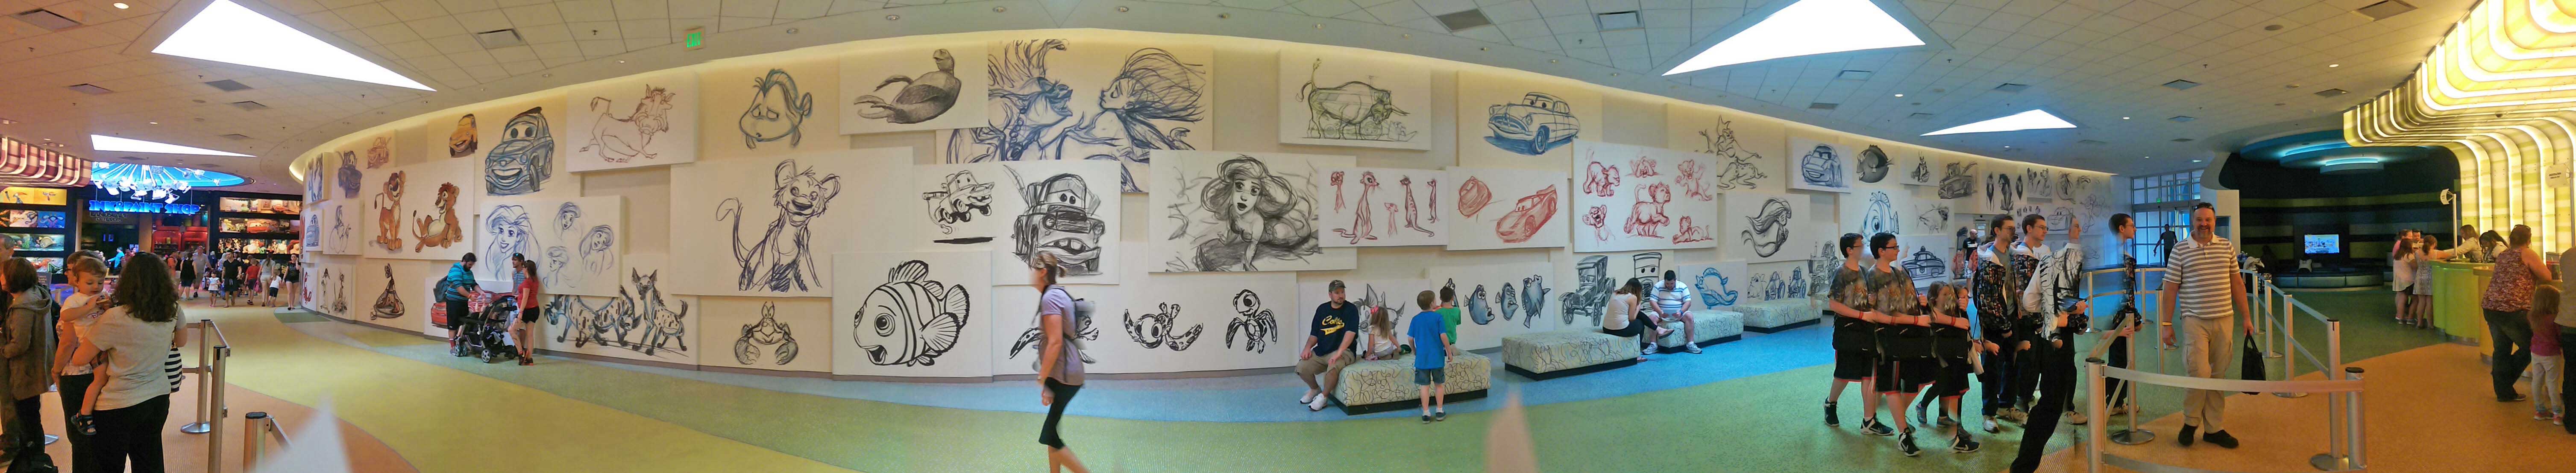 Disney's Art of Animation Resort - Animation Hall